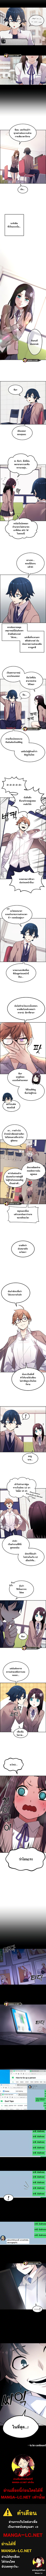 Webtoon Character Na Kang Lim ร ยธโ€ขร ยธยญร ยธโขร ยธโ€”ร ยธยตร ยนห 7 (4)